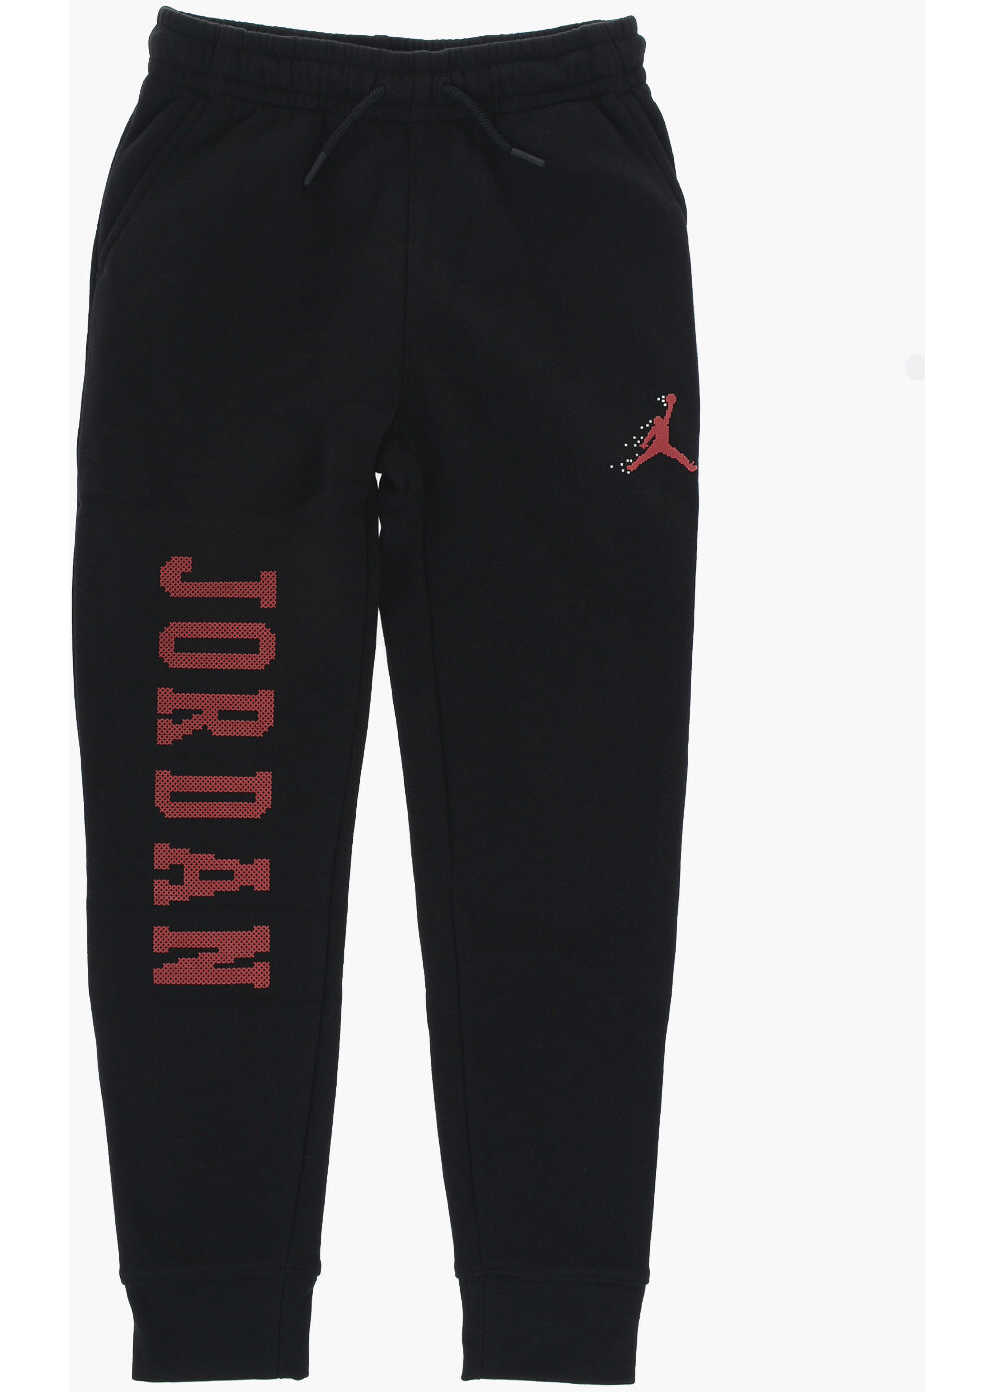 Nike Air Jordan Fleeced-Cotton Blend Mj Essentials Joggers Black